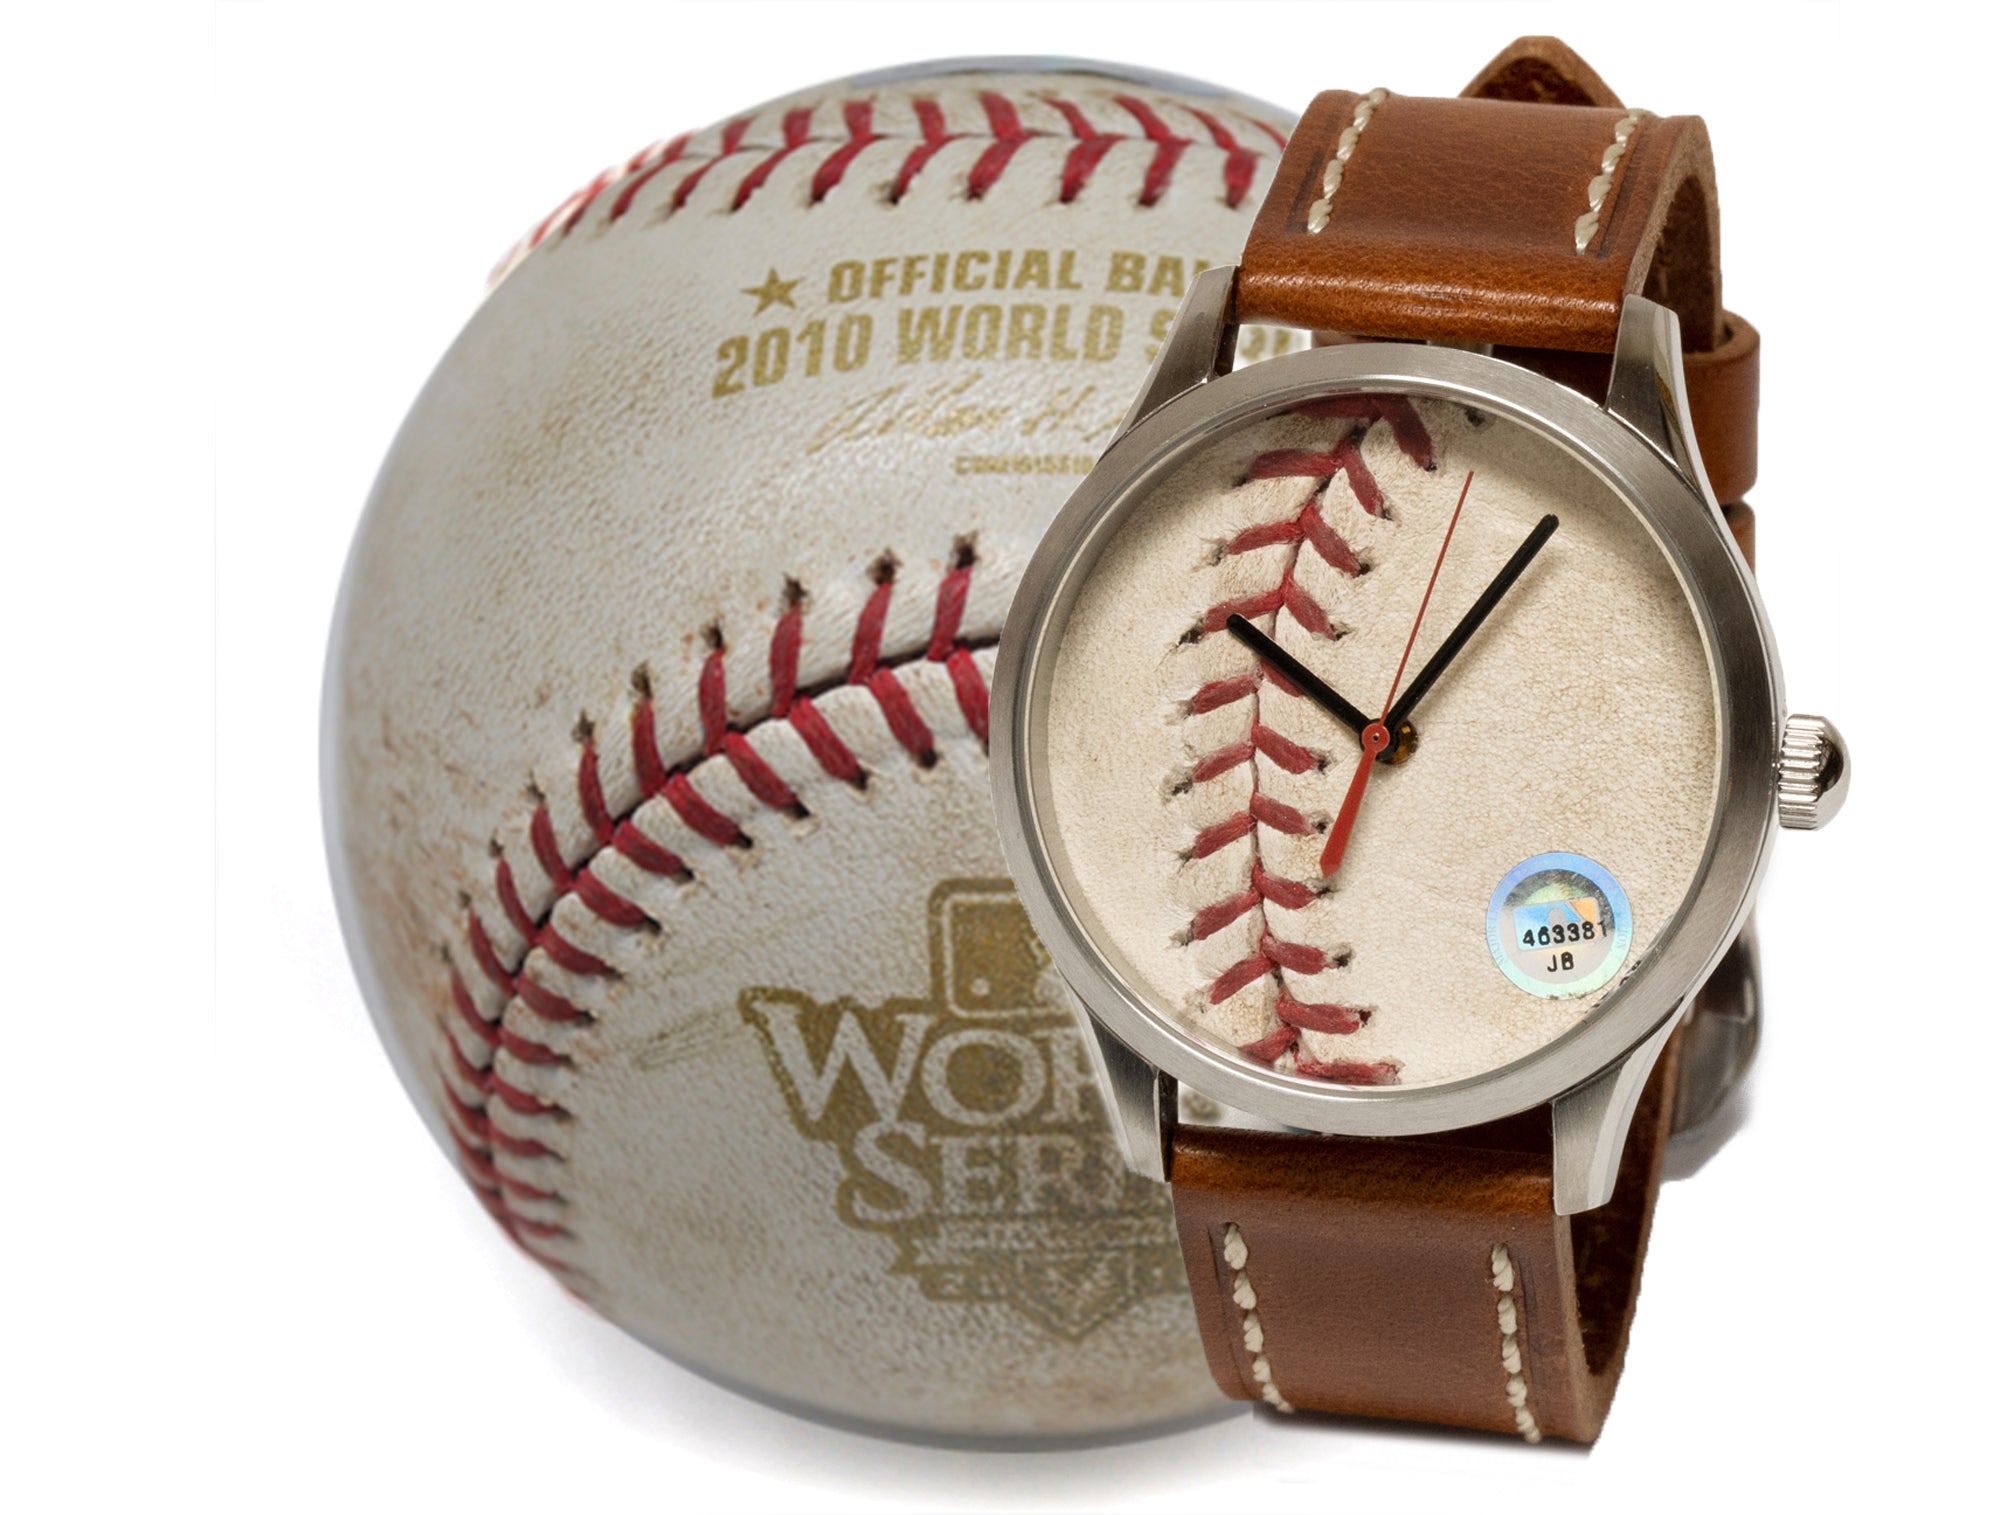 Saint Louis Cardinals Core MLB Wristbands